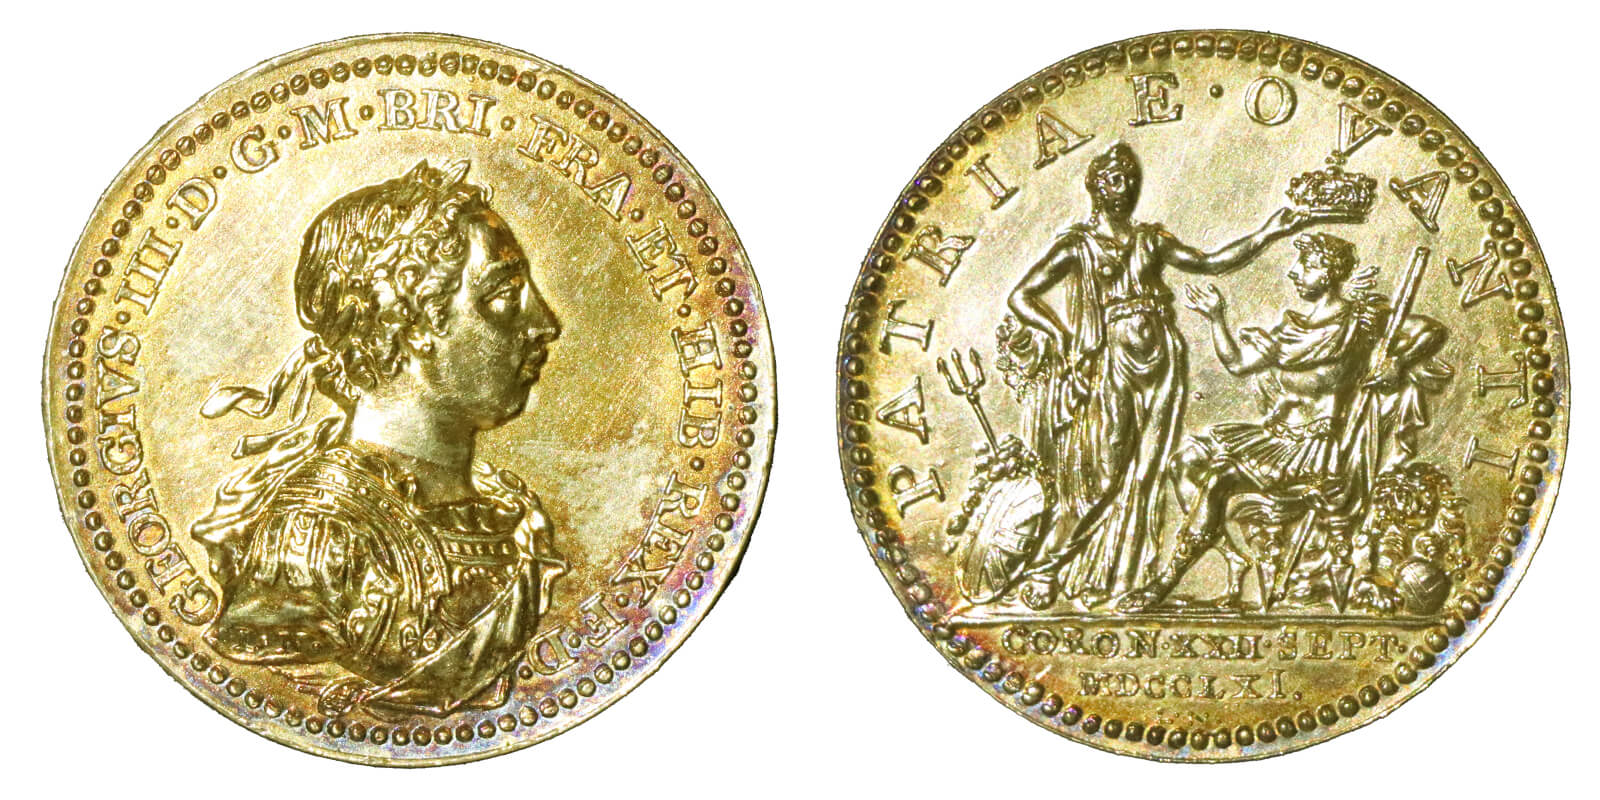 George III coronation medal.jpg